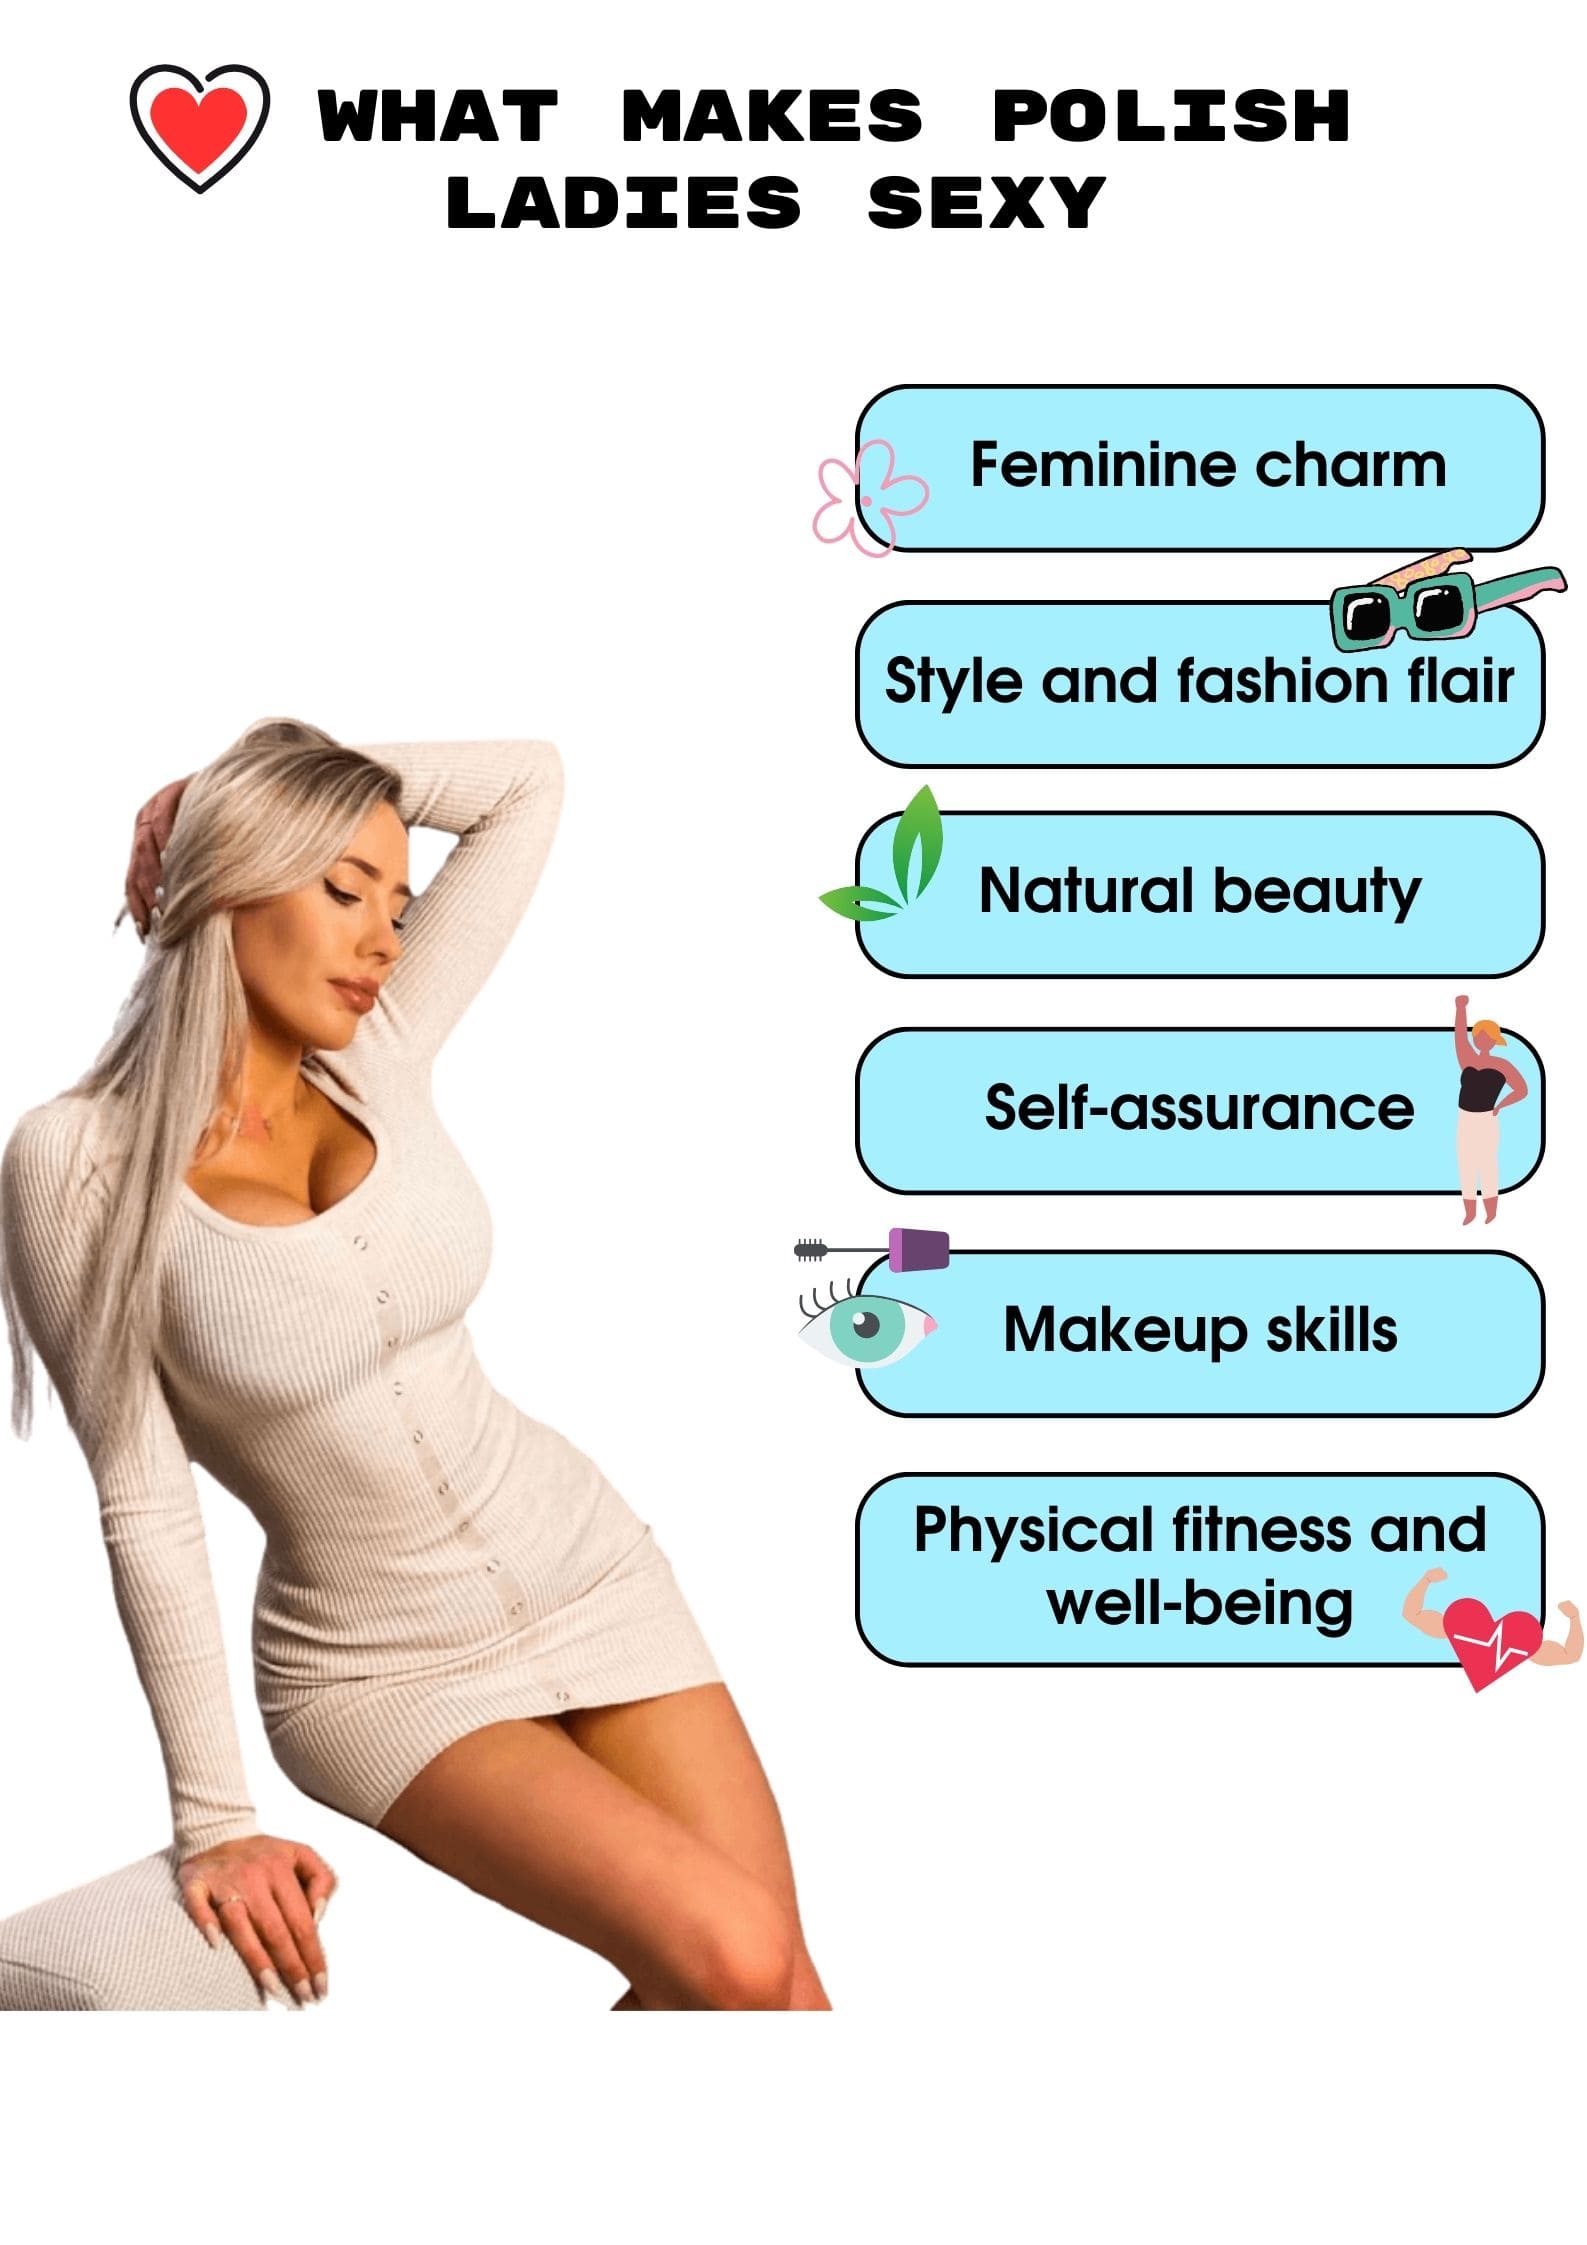 what makes polish ladies sexy infographic